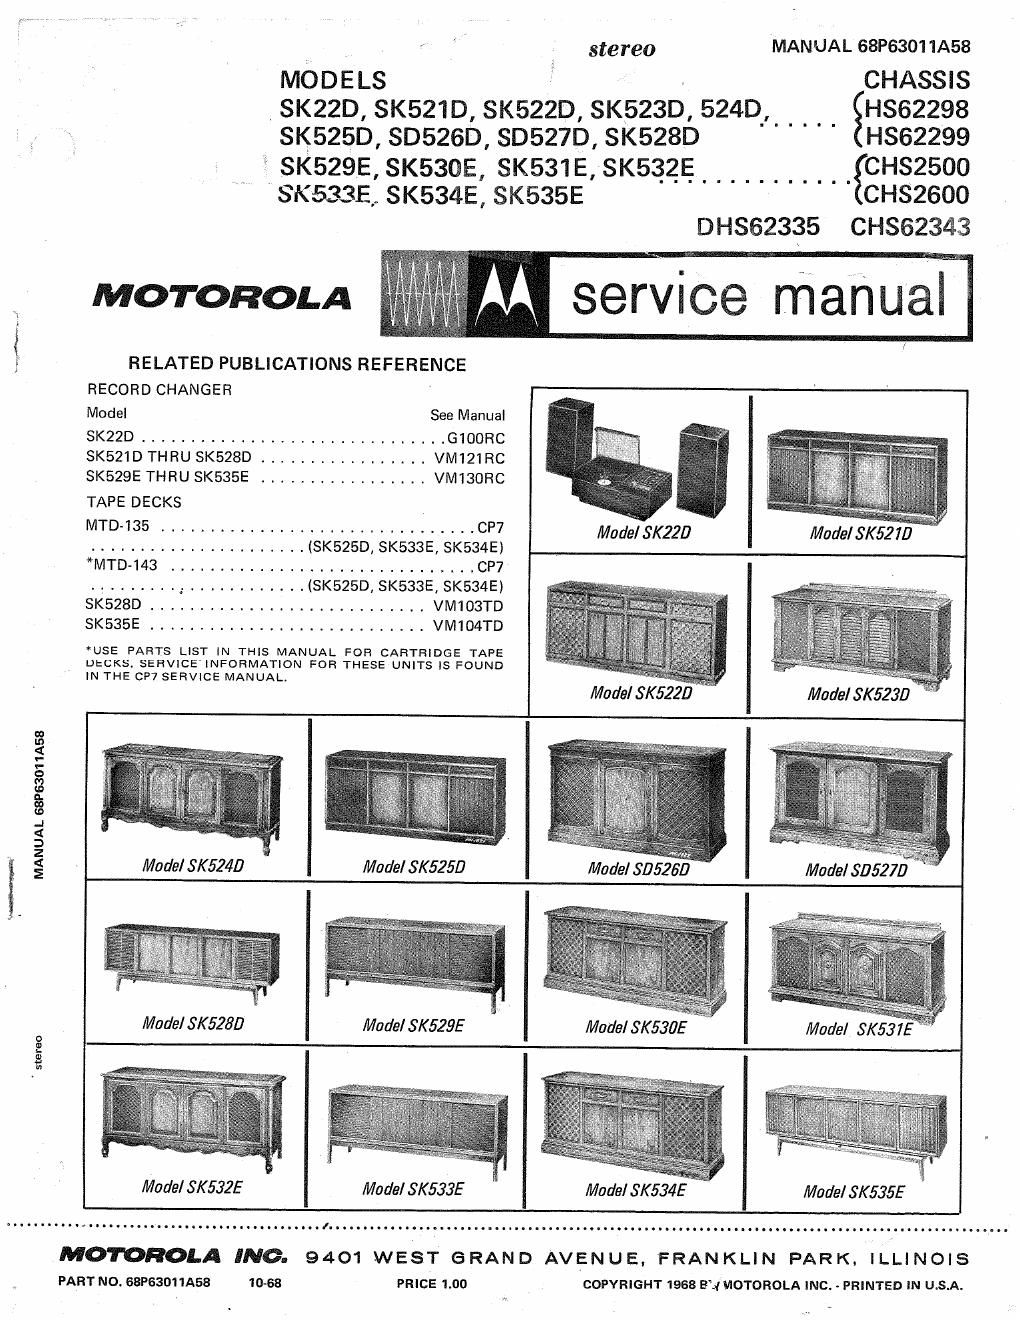 motorola sk 524 d service manual